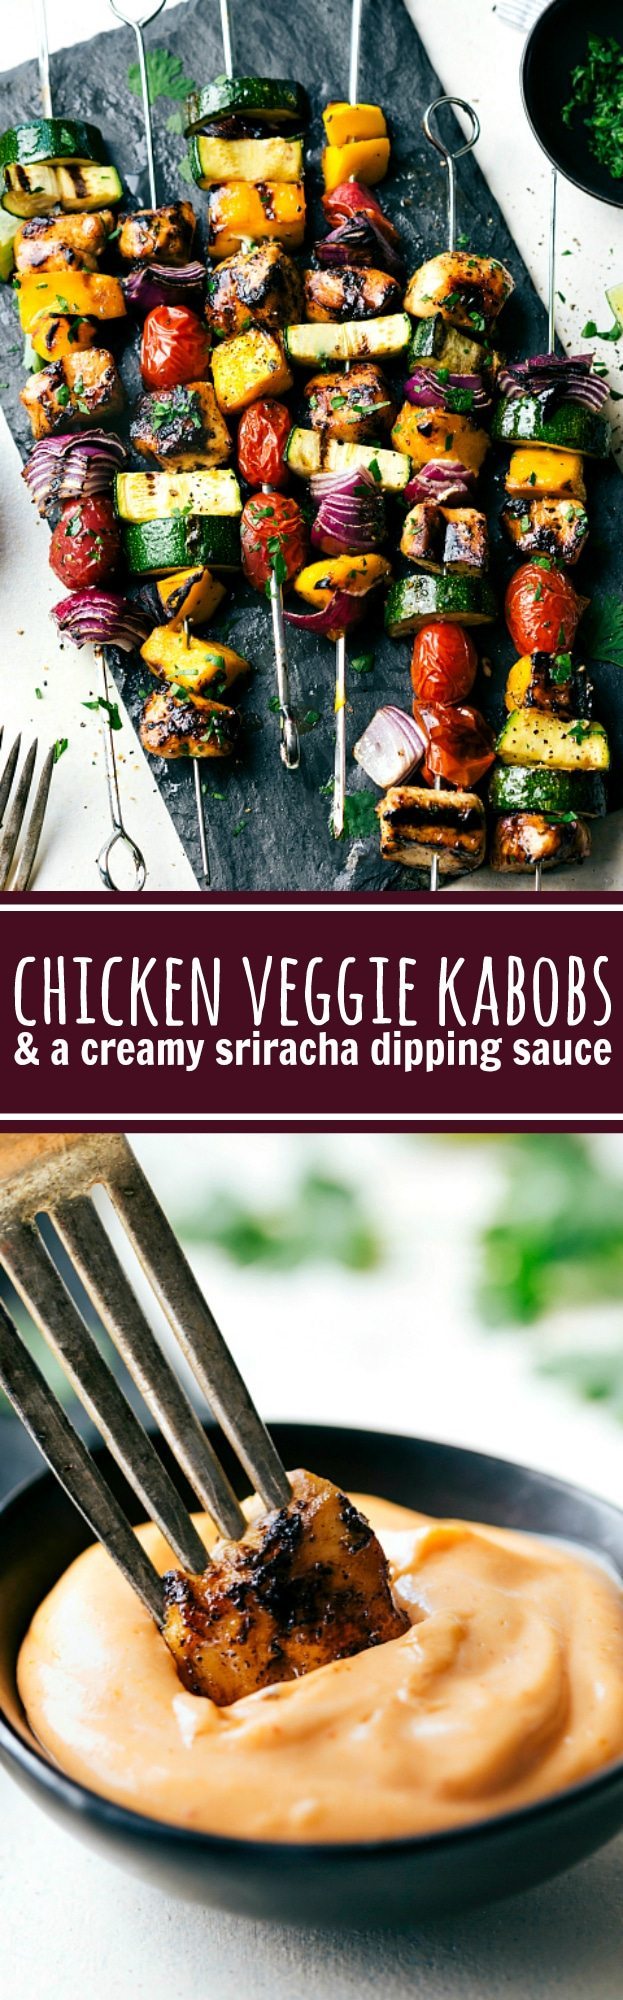 Kale Salad Recipe (Orange Balsamic Vinaigrette) - Chelsea's Messy Apron